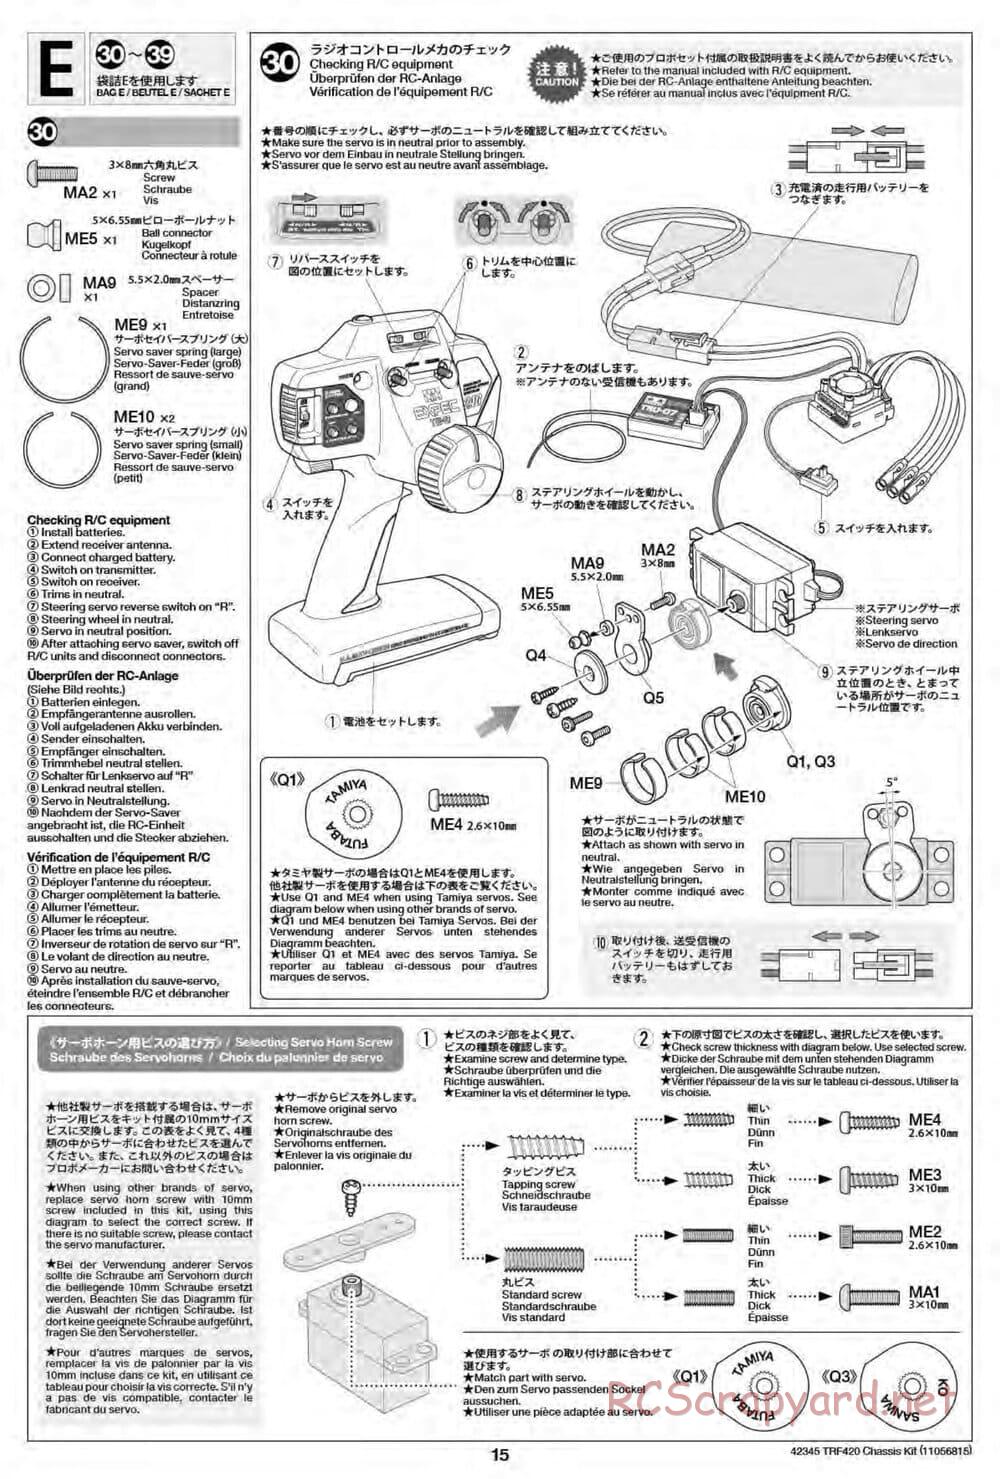 Tamiya - TRF420 Chassis - Manual - Page 15